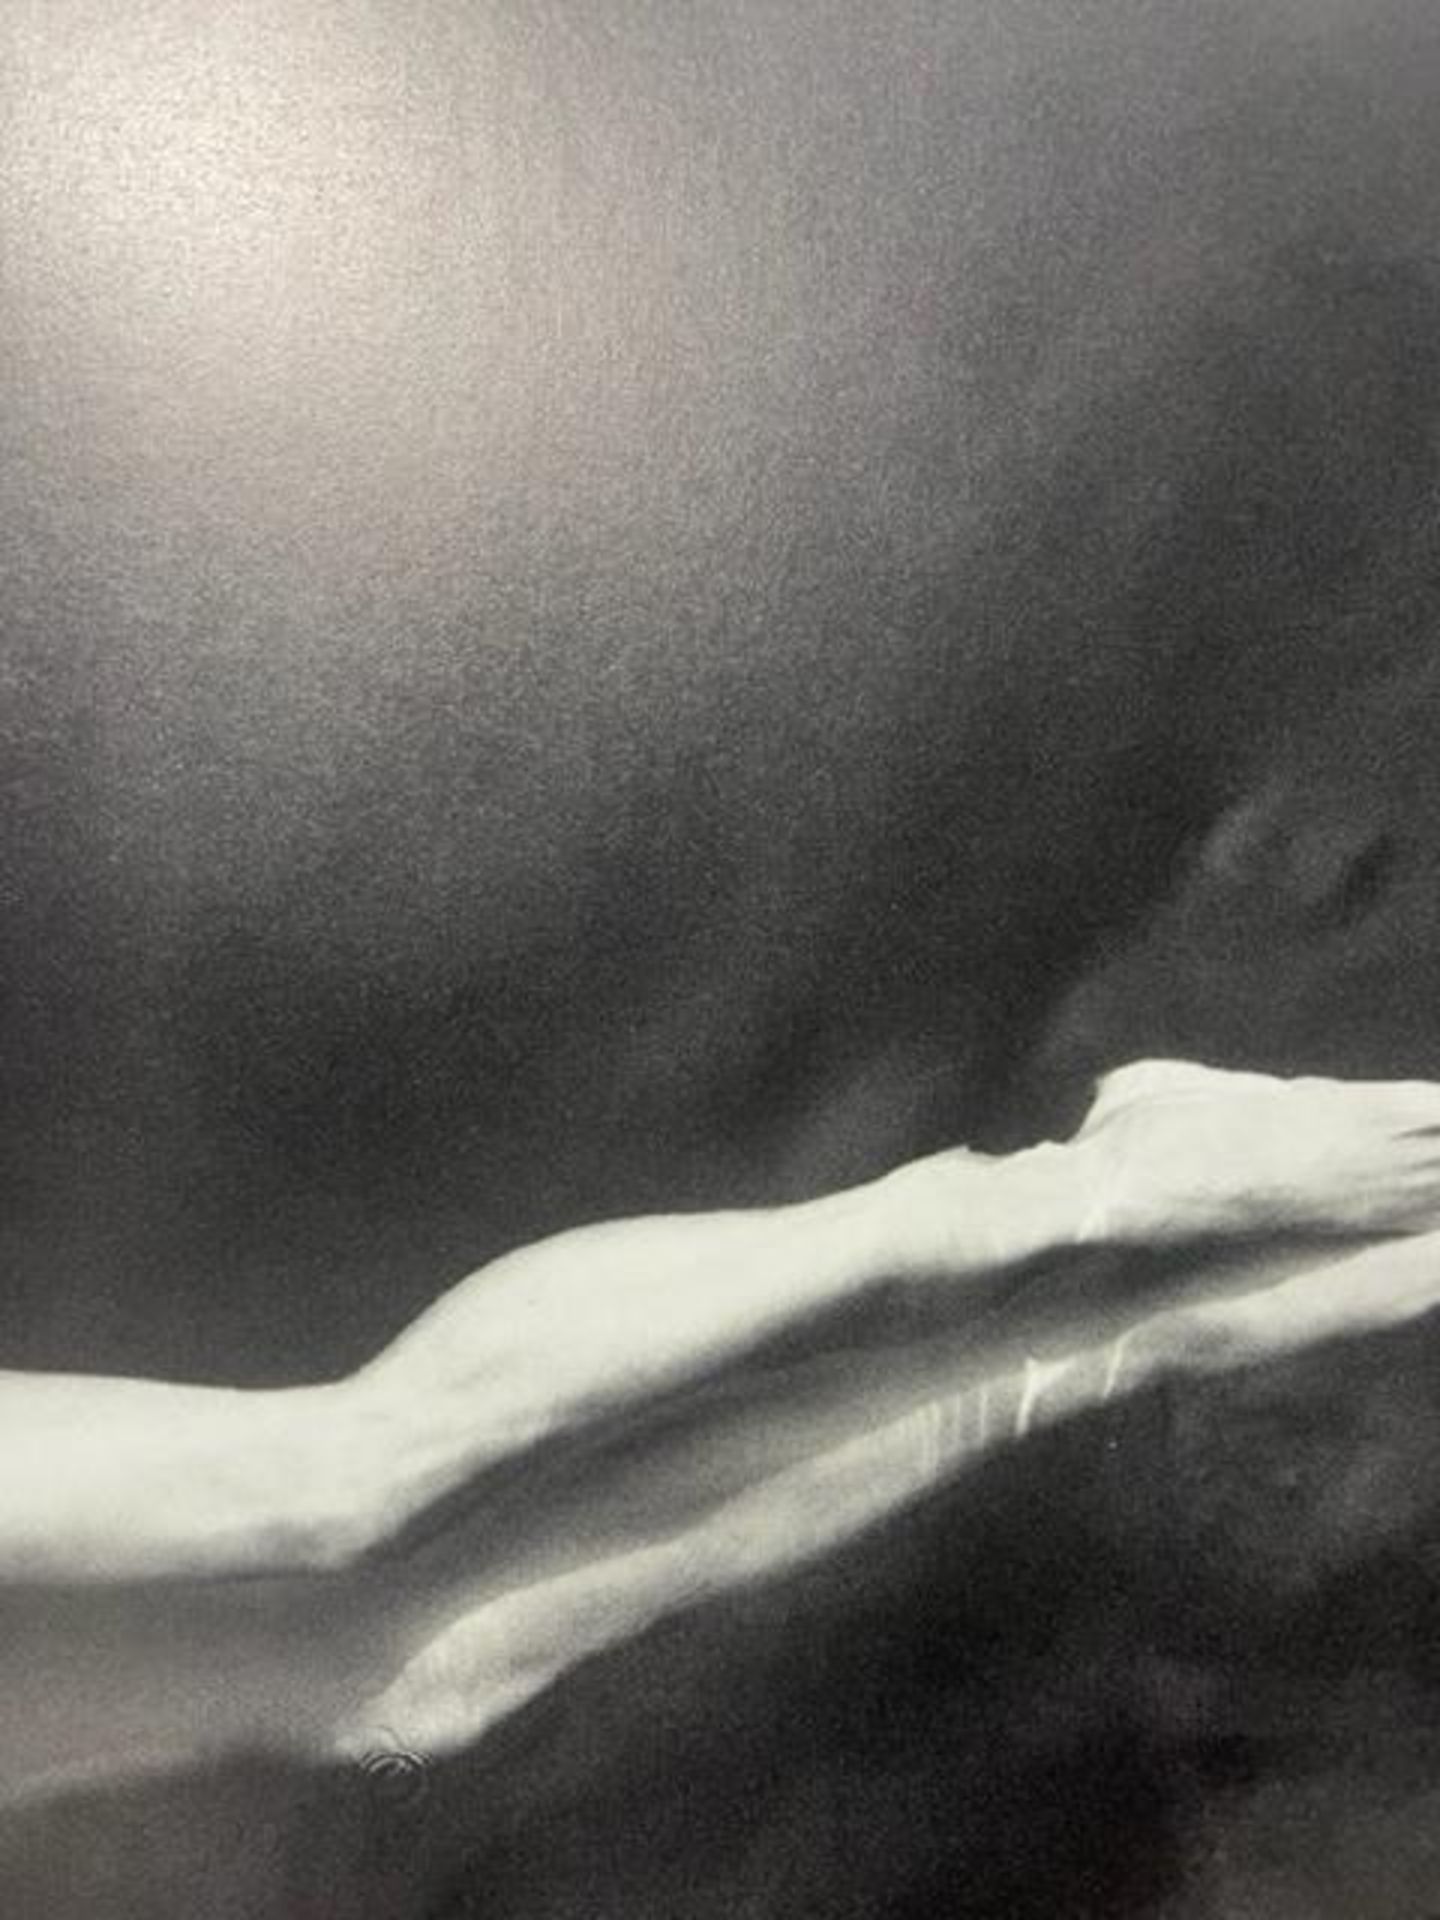 Annie Leibovitz "Untitled" Print. - Image 3 of 6